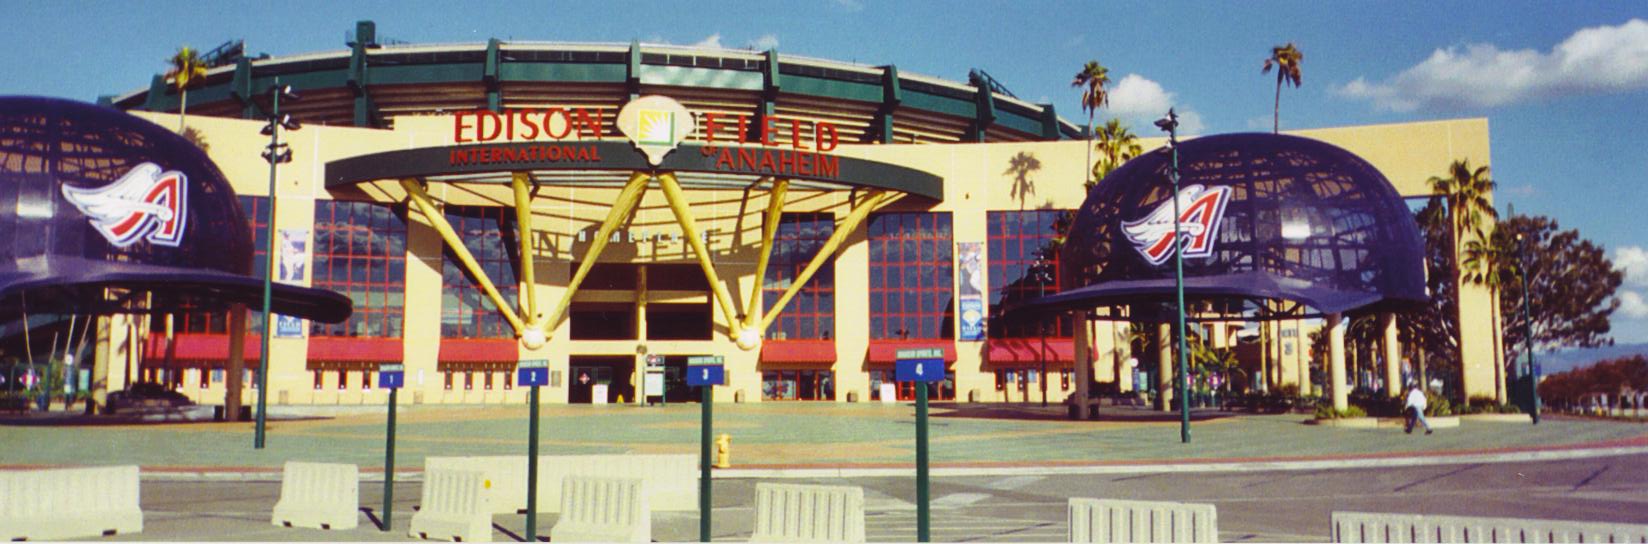 Edison International Field - Anaheim, California